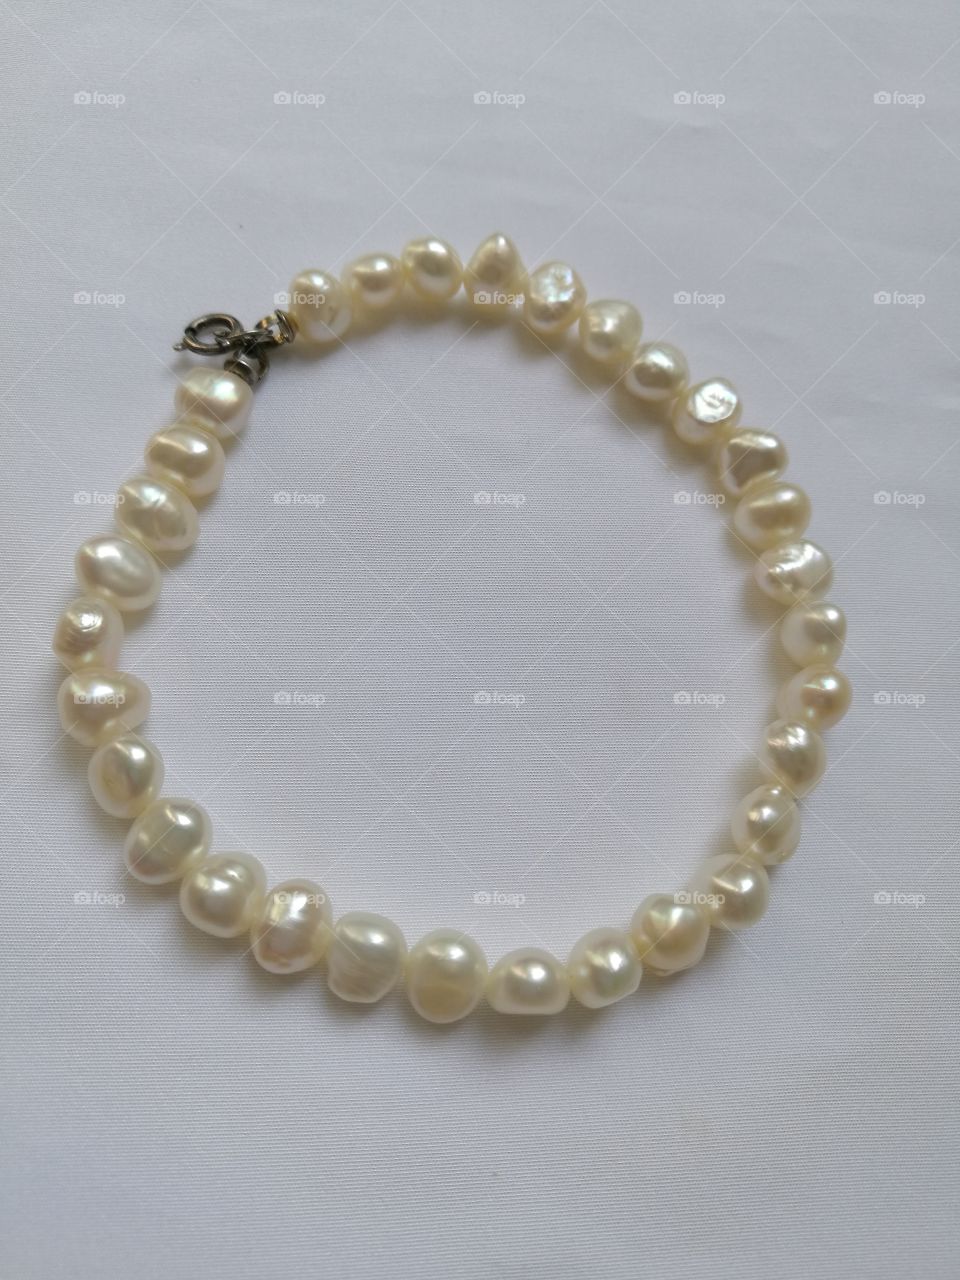 pearl bracelet on white background.